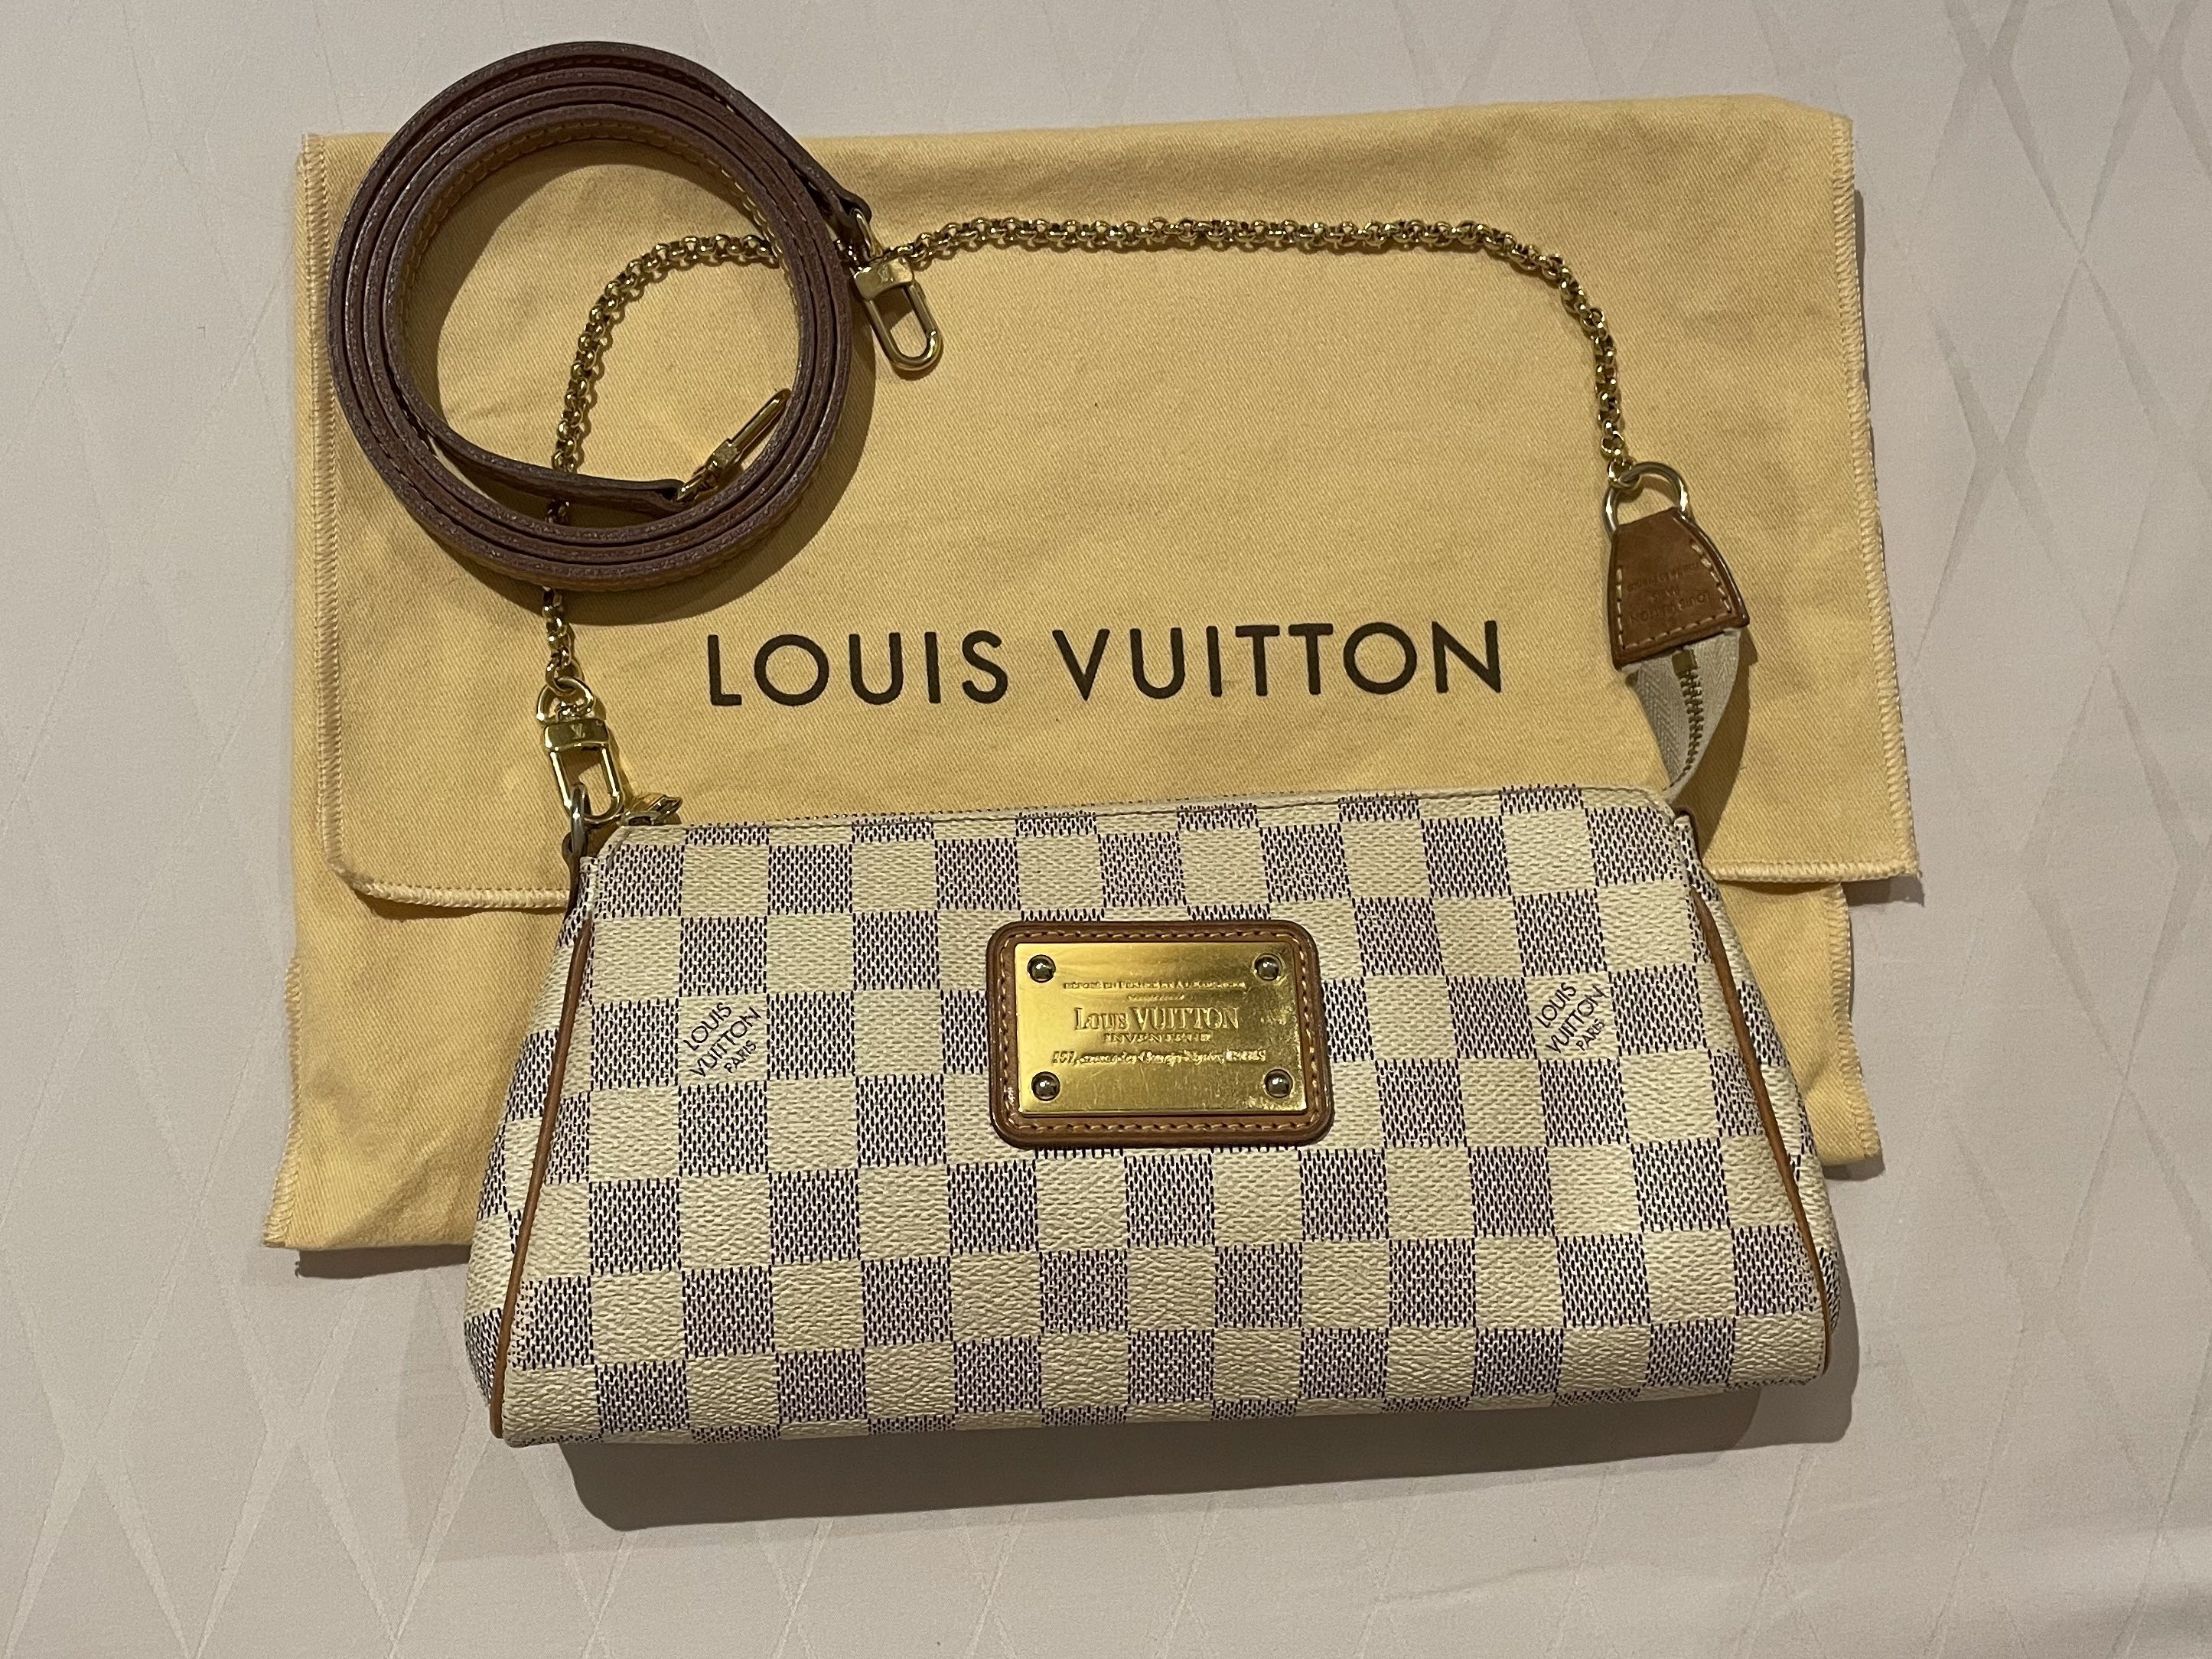 Authentic LV Eva clutch Azure #lyn_luxurycloset2 #louisvuitton #Eva#Cl